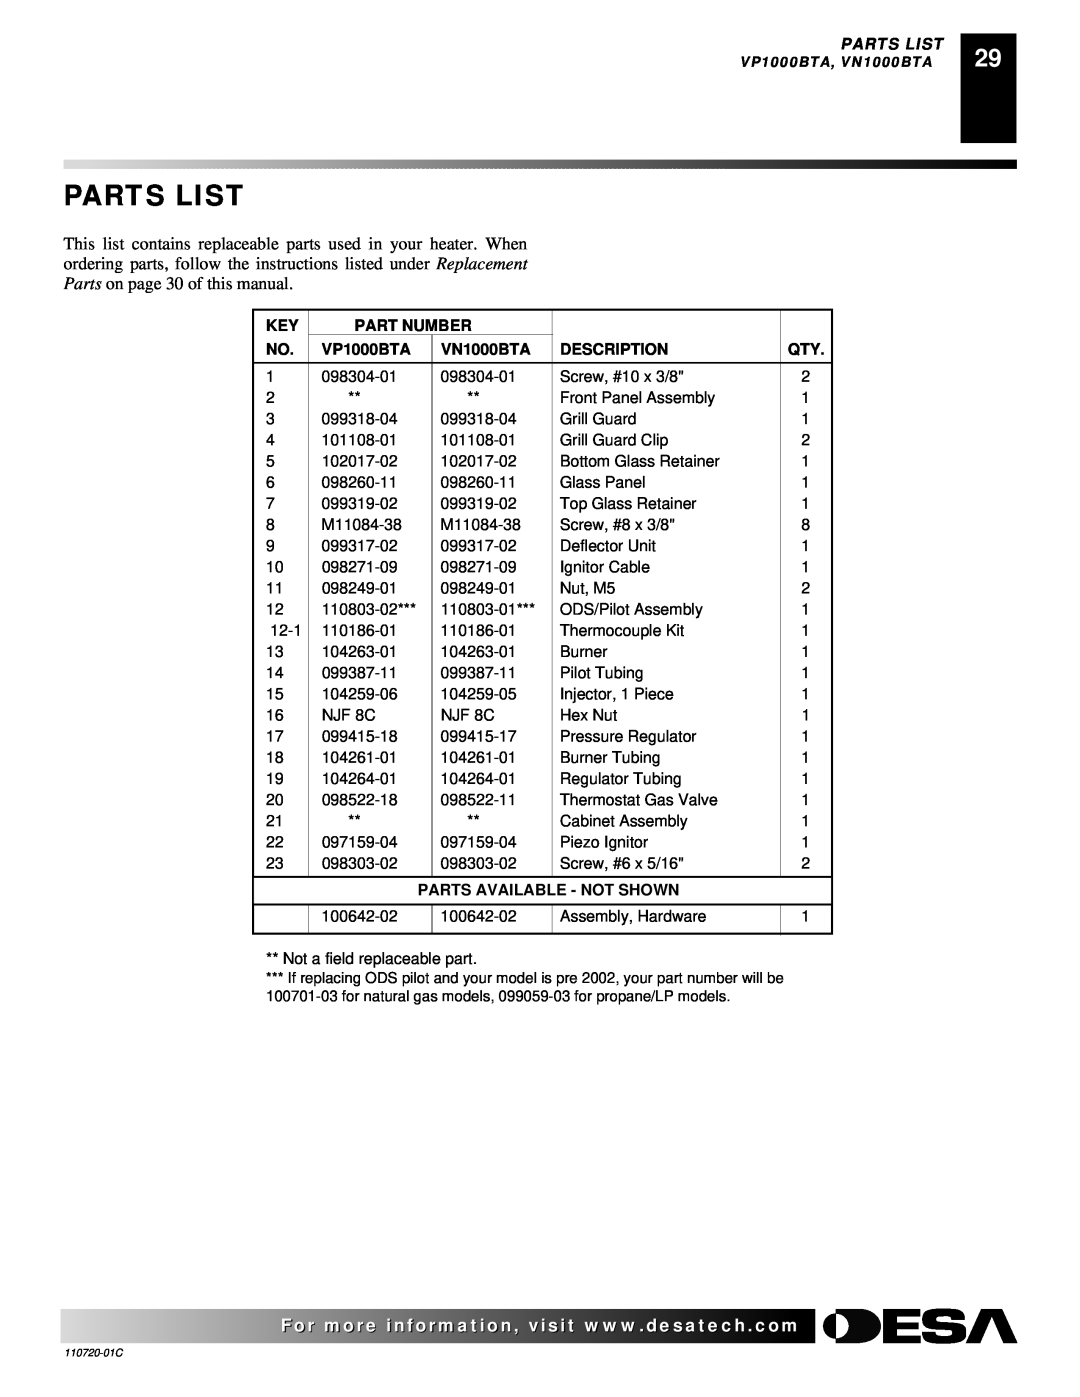 Desa VN10A installation manual Parts List, Part Number, VP1000BTA, VN1000BTA, Description, Parts Available - Not Shown 